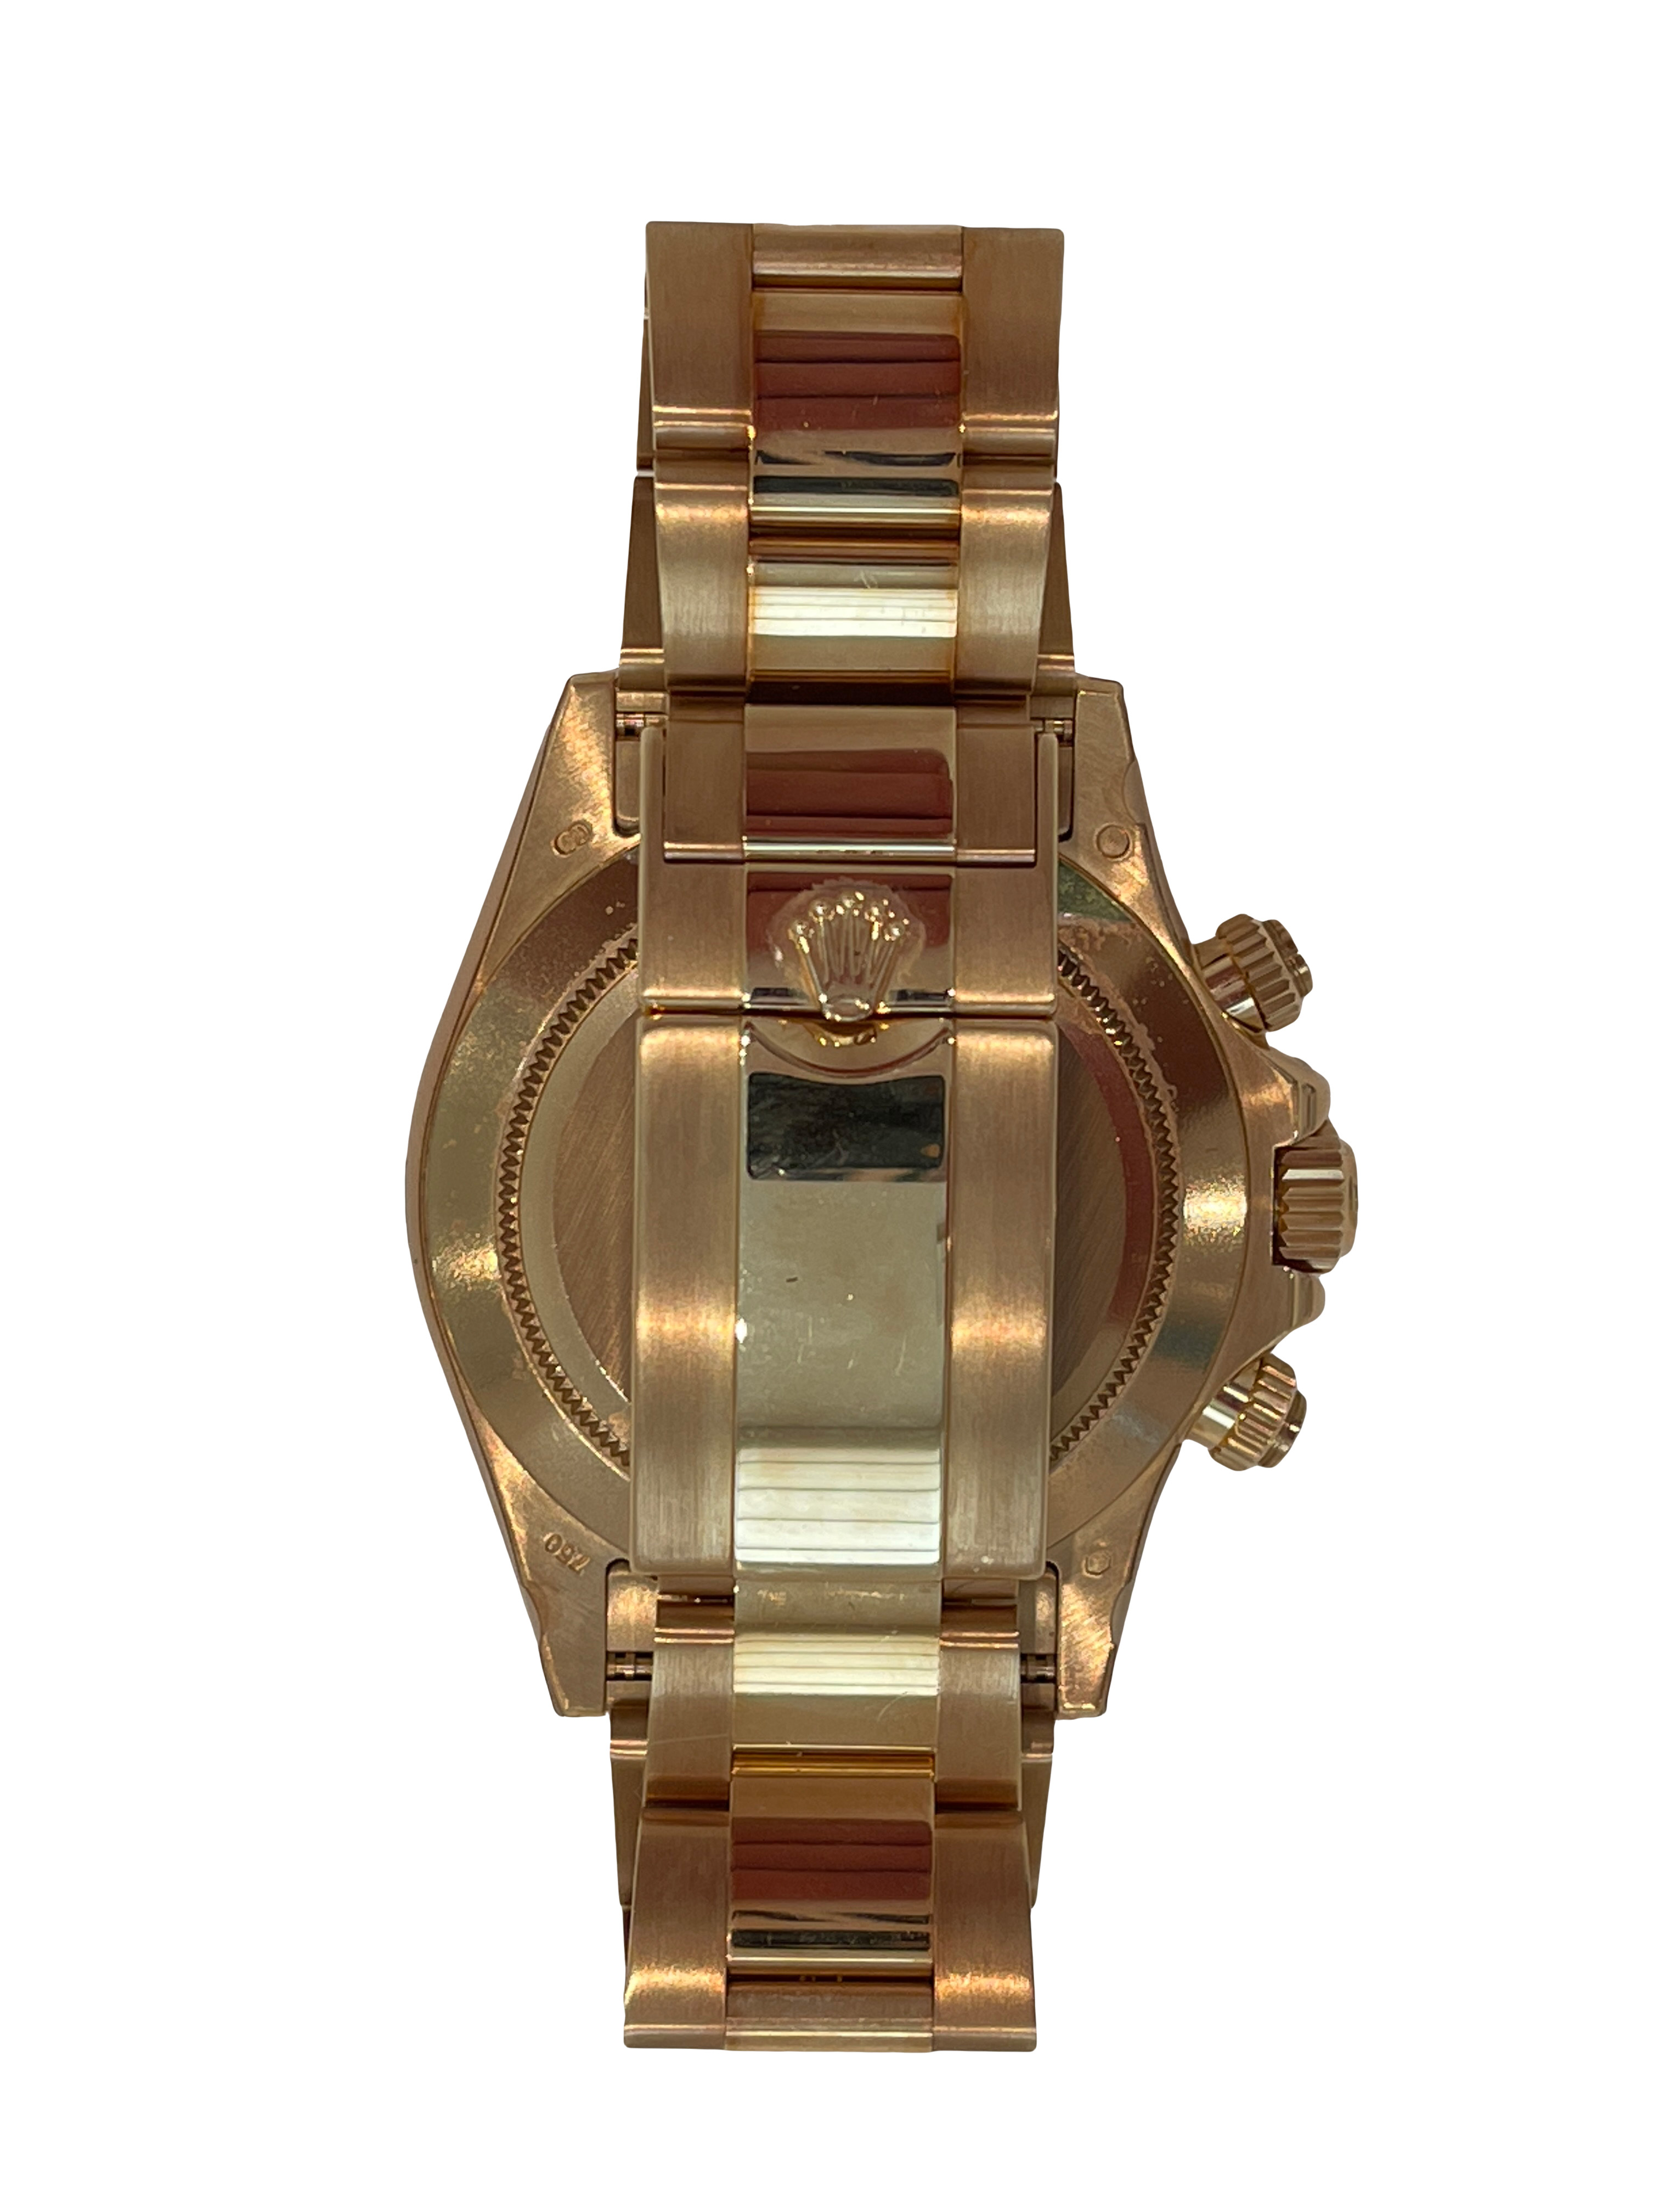 Rolex, Year 2013, #116528, Movement AUTOMATIC Chronograph. Model: Daytona Yellow Gold, White Dial. - Image 2 of 4